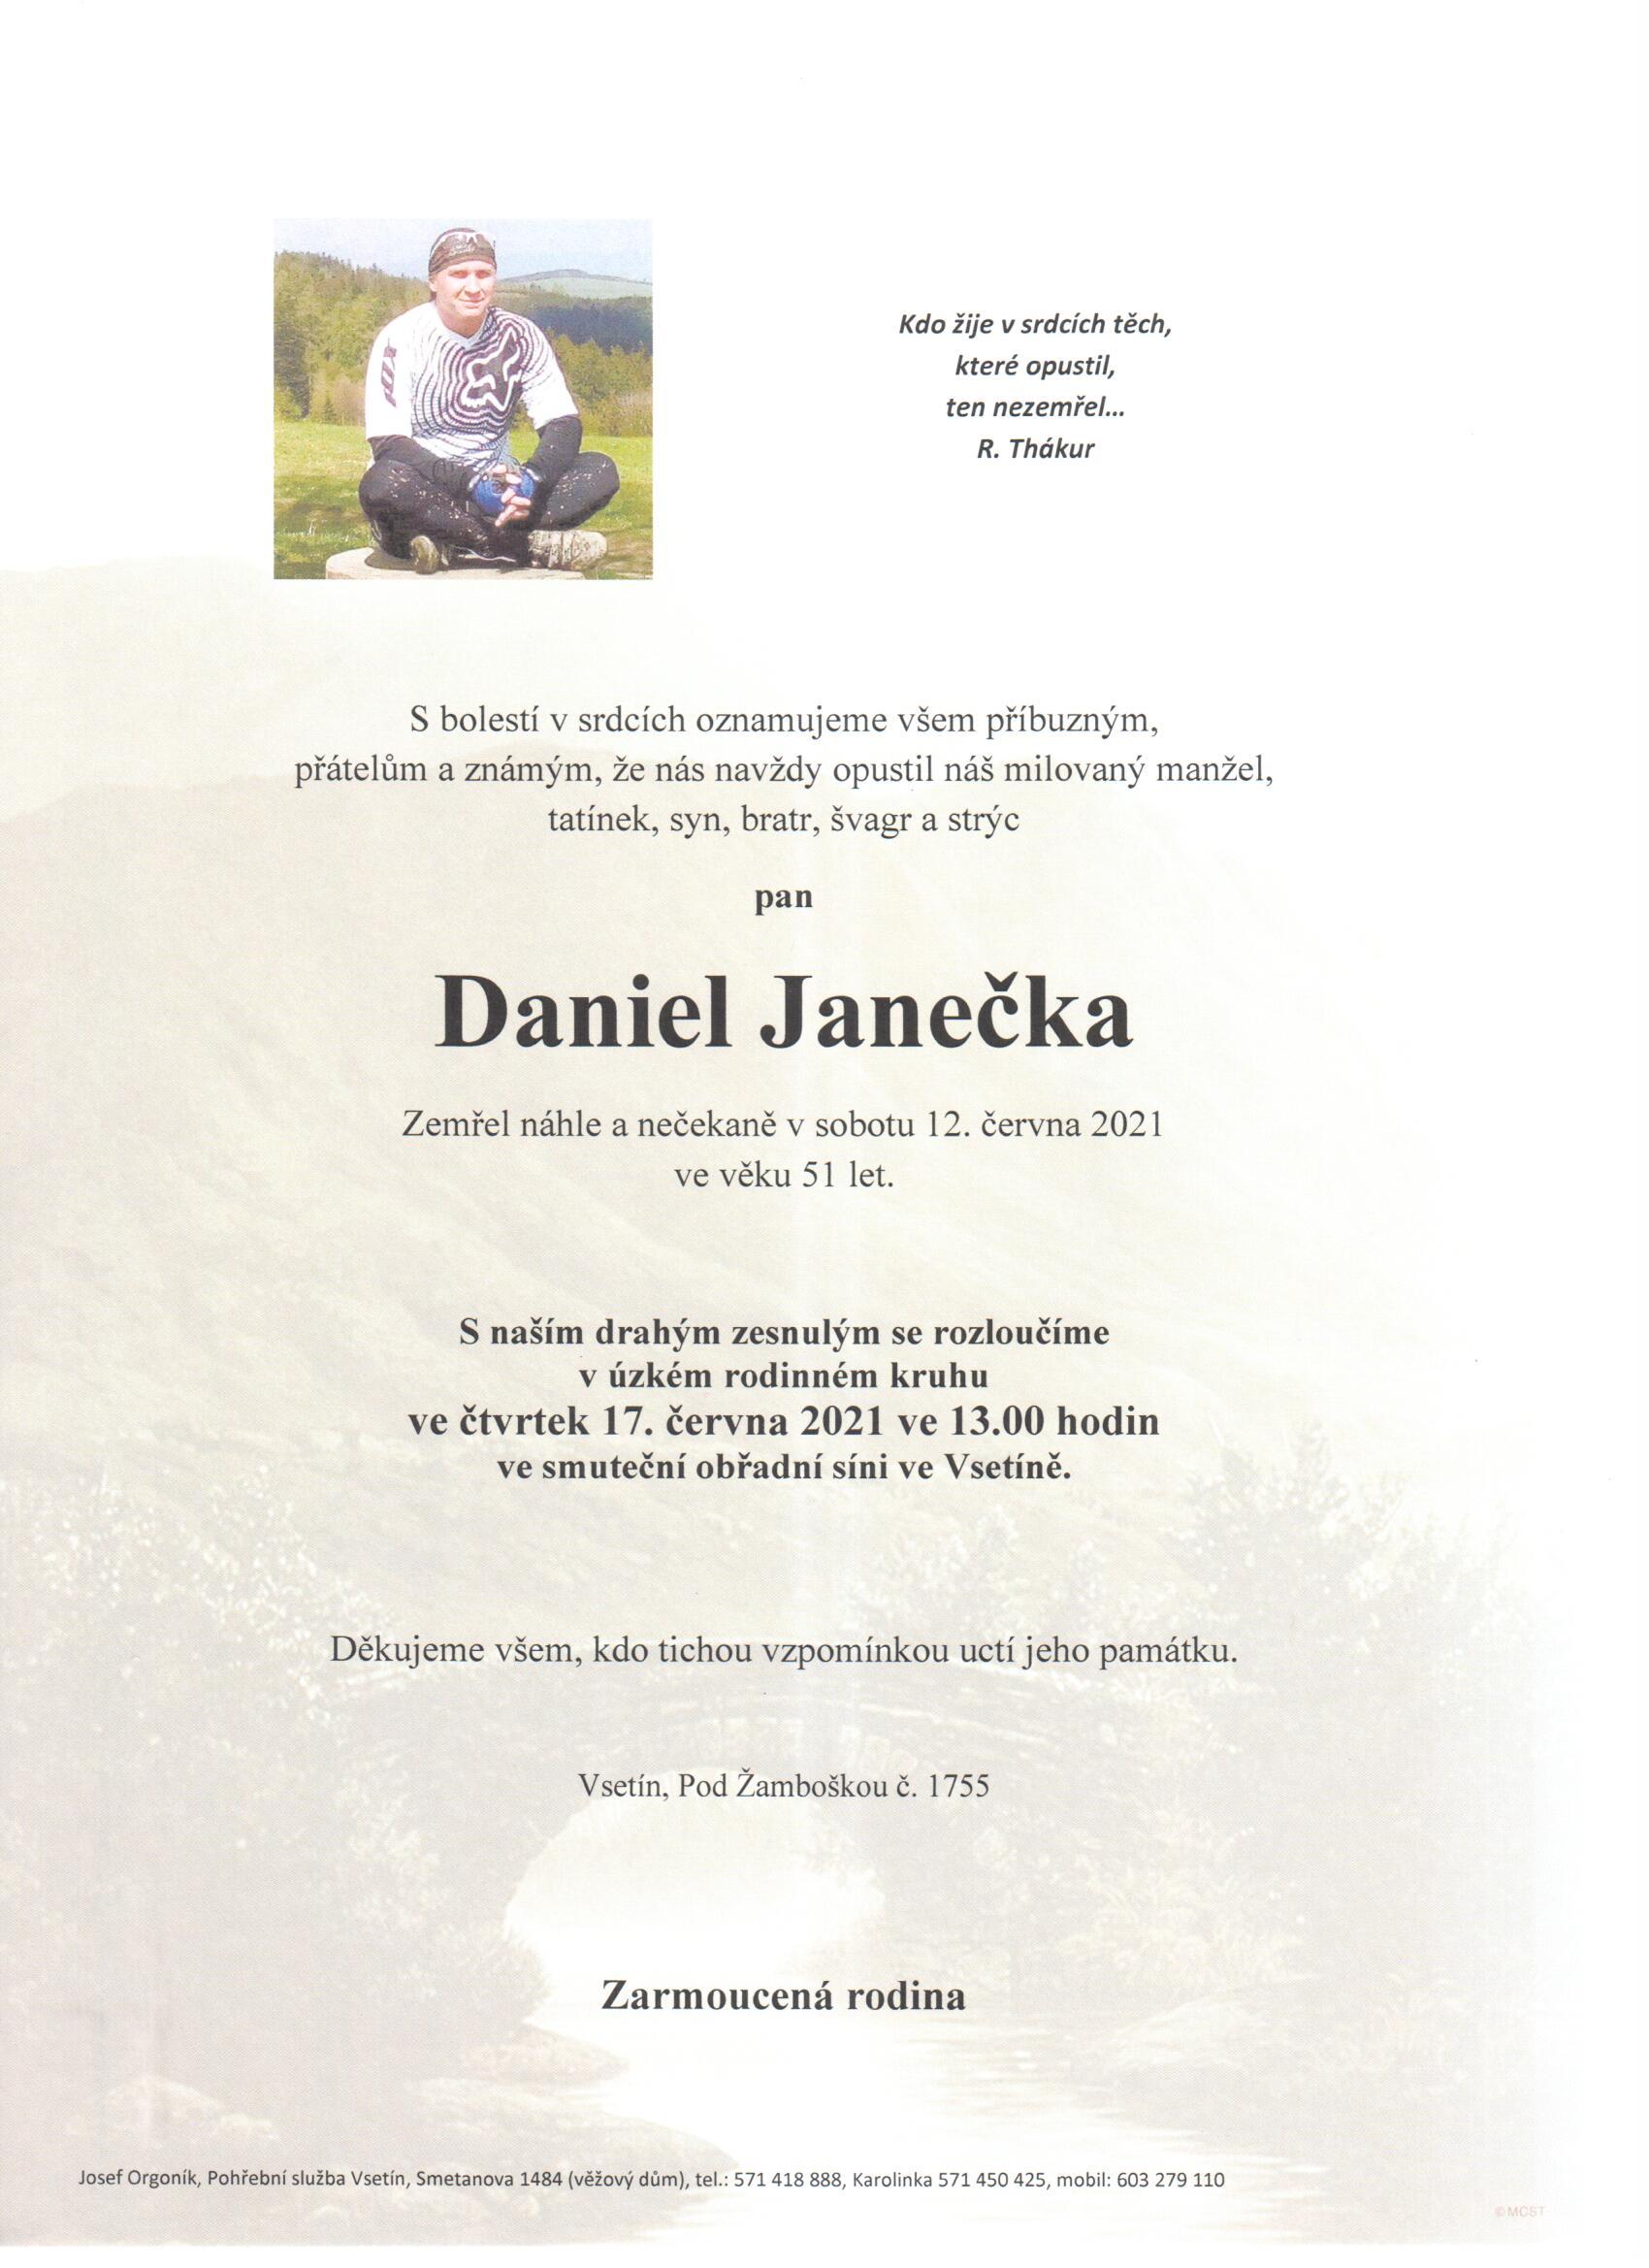 Daniel Janečka